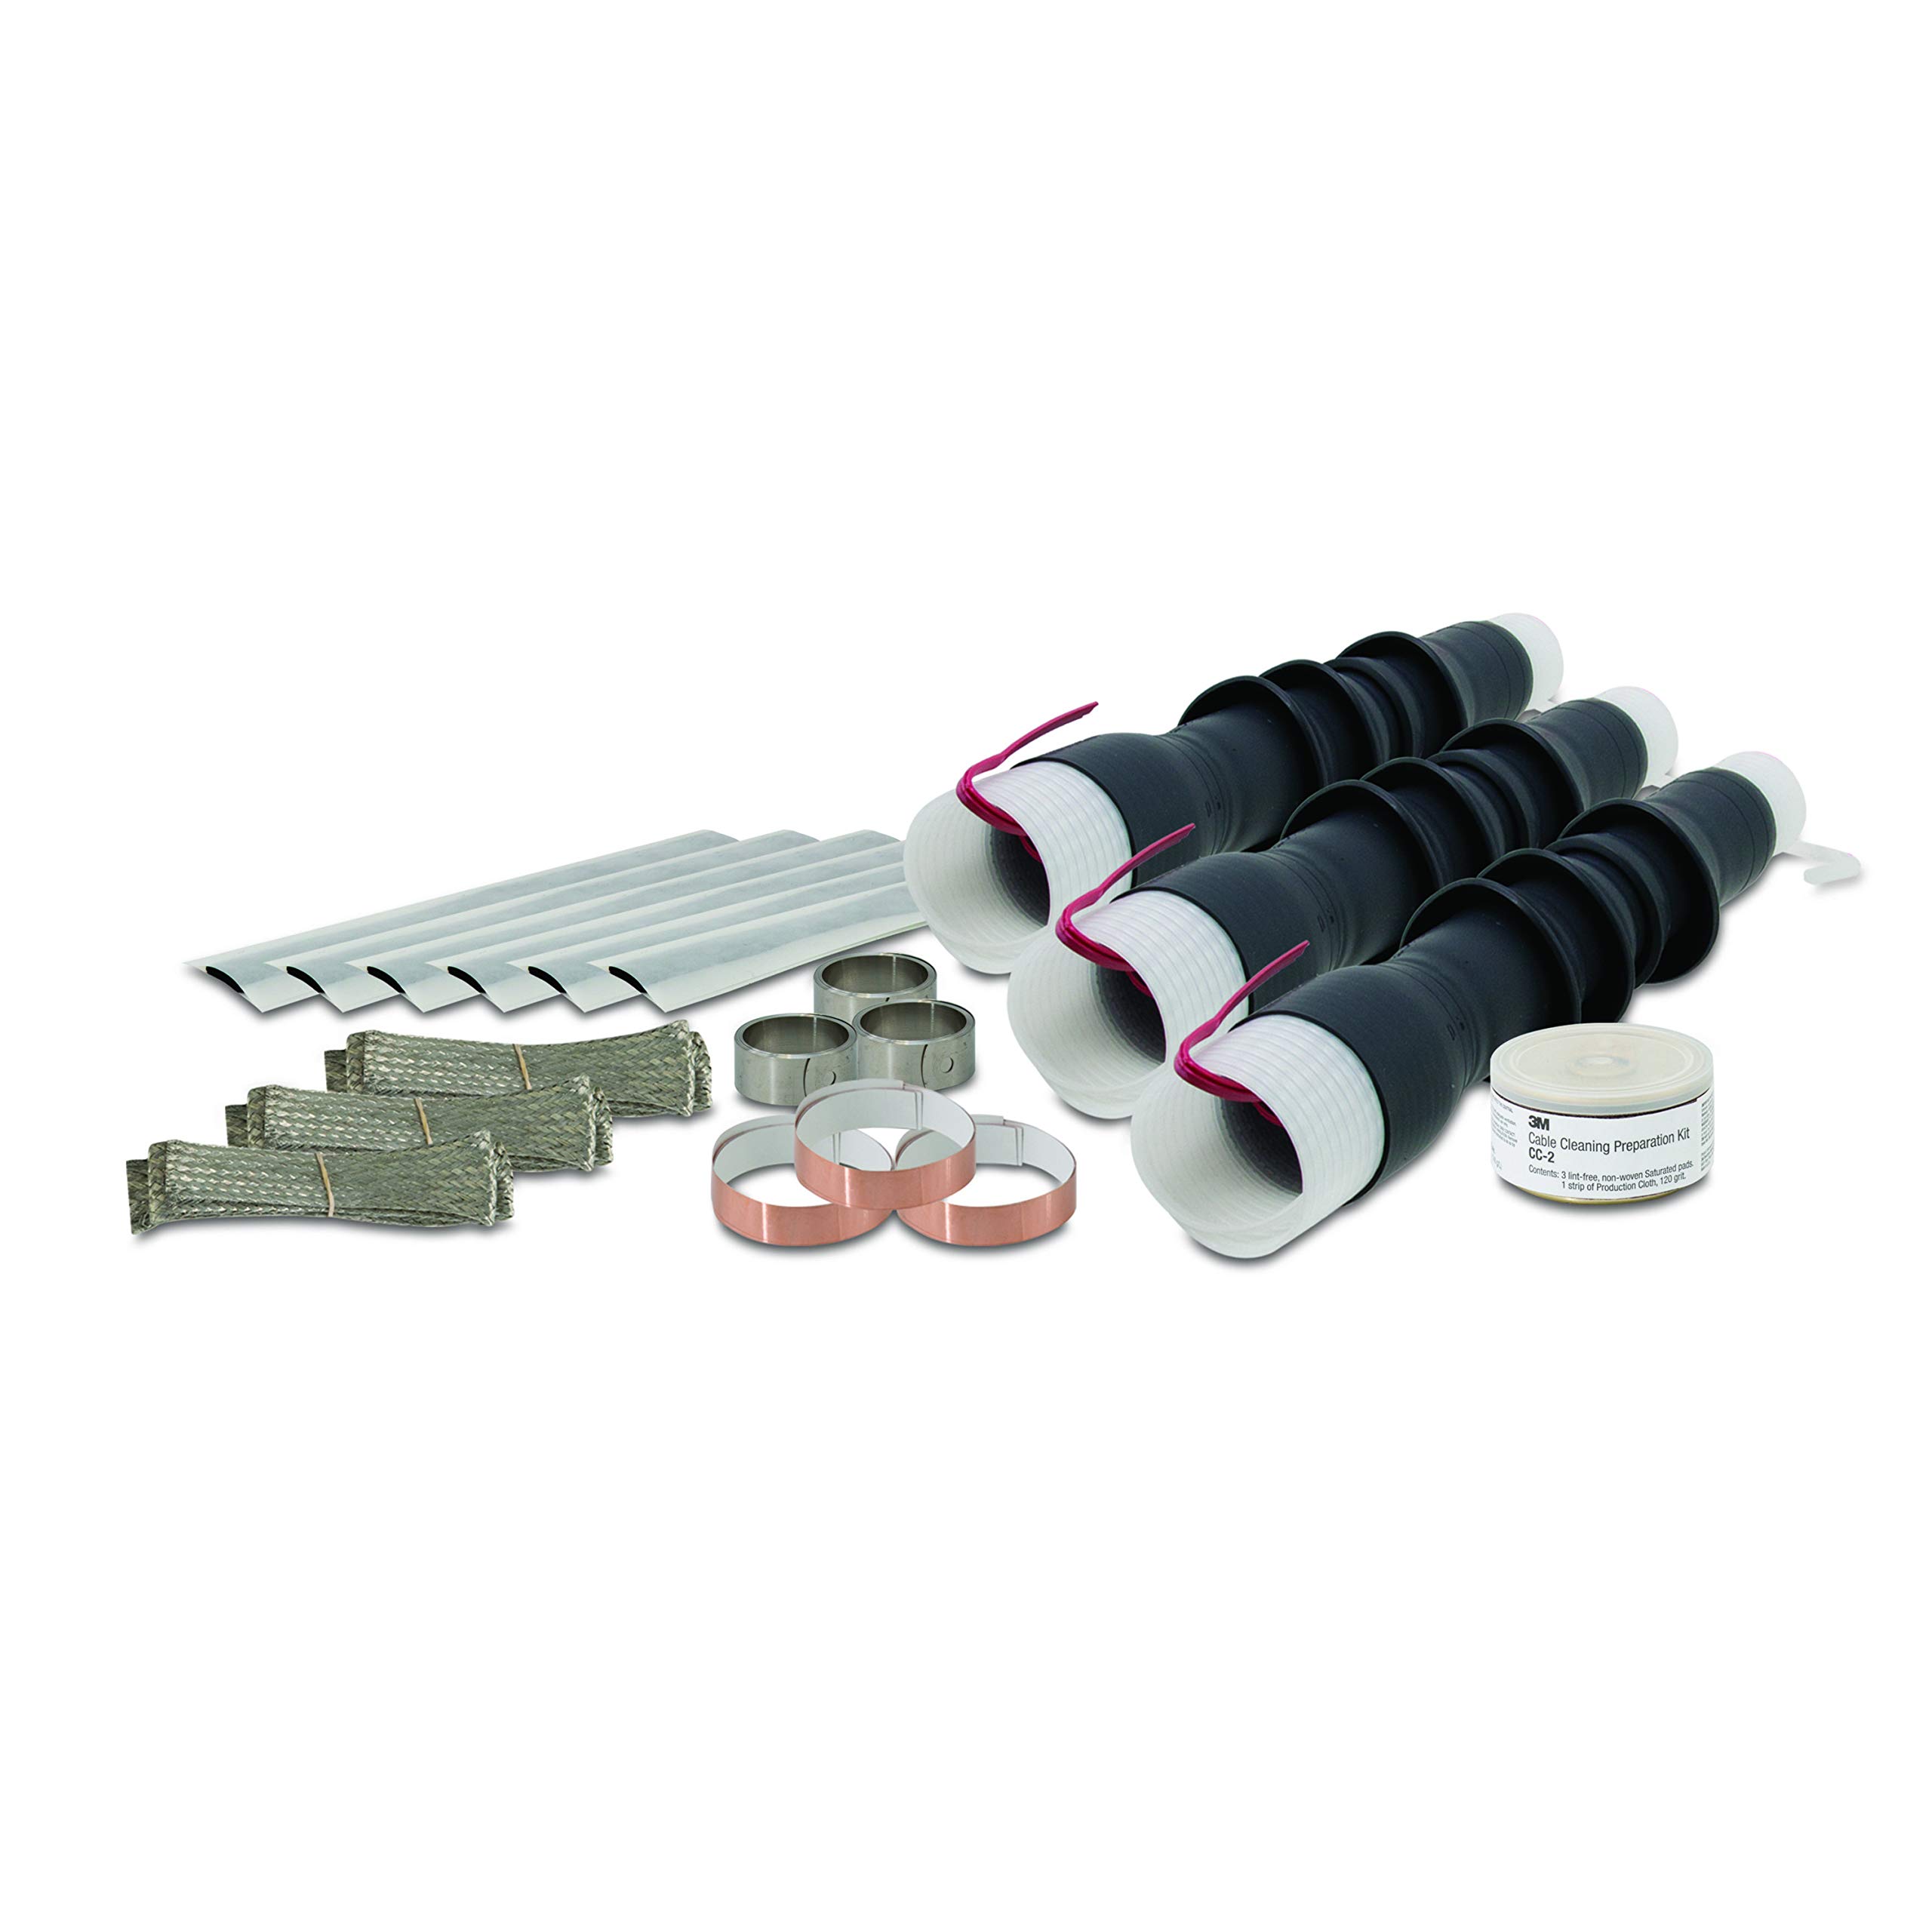 Cold Shrink QT-III 3/C Termination Kit 7624-T-110-3G, Tape/Wire/UniShield®, 5-15 kV, Insulation OD 0.92-1.18 in, 3/kit